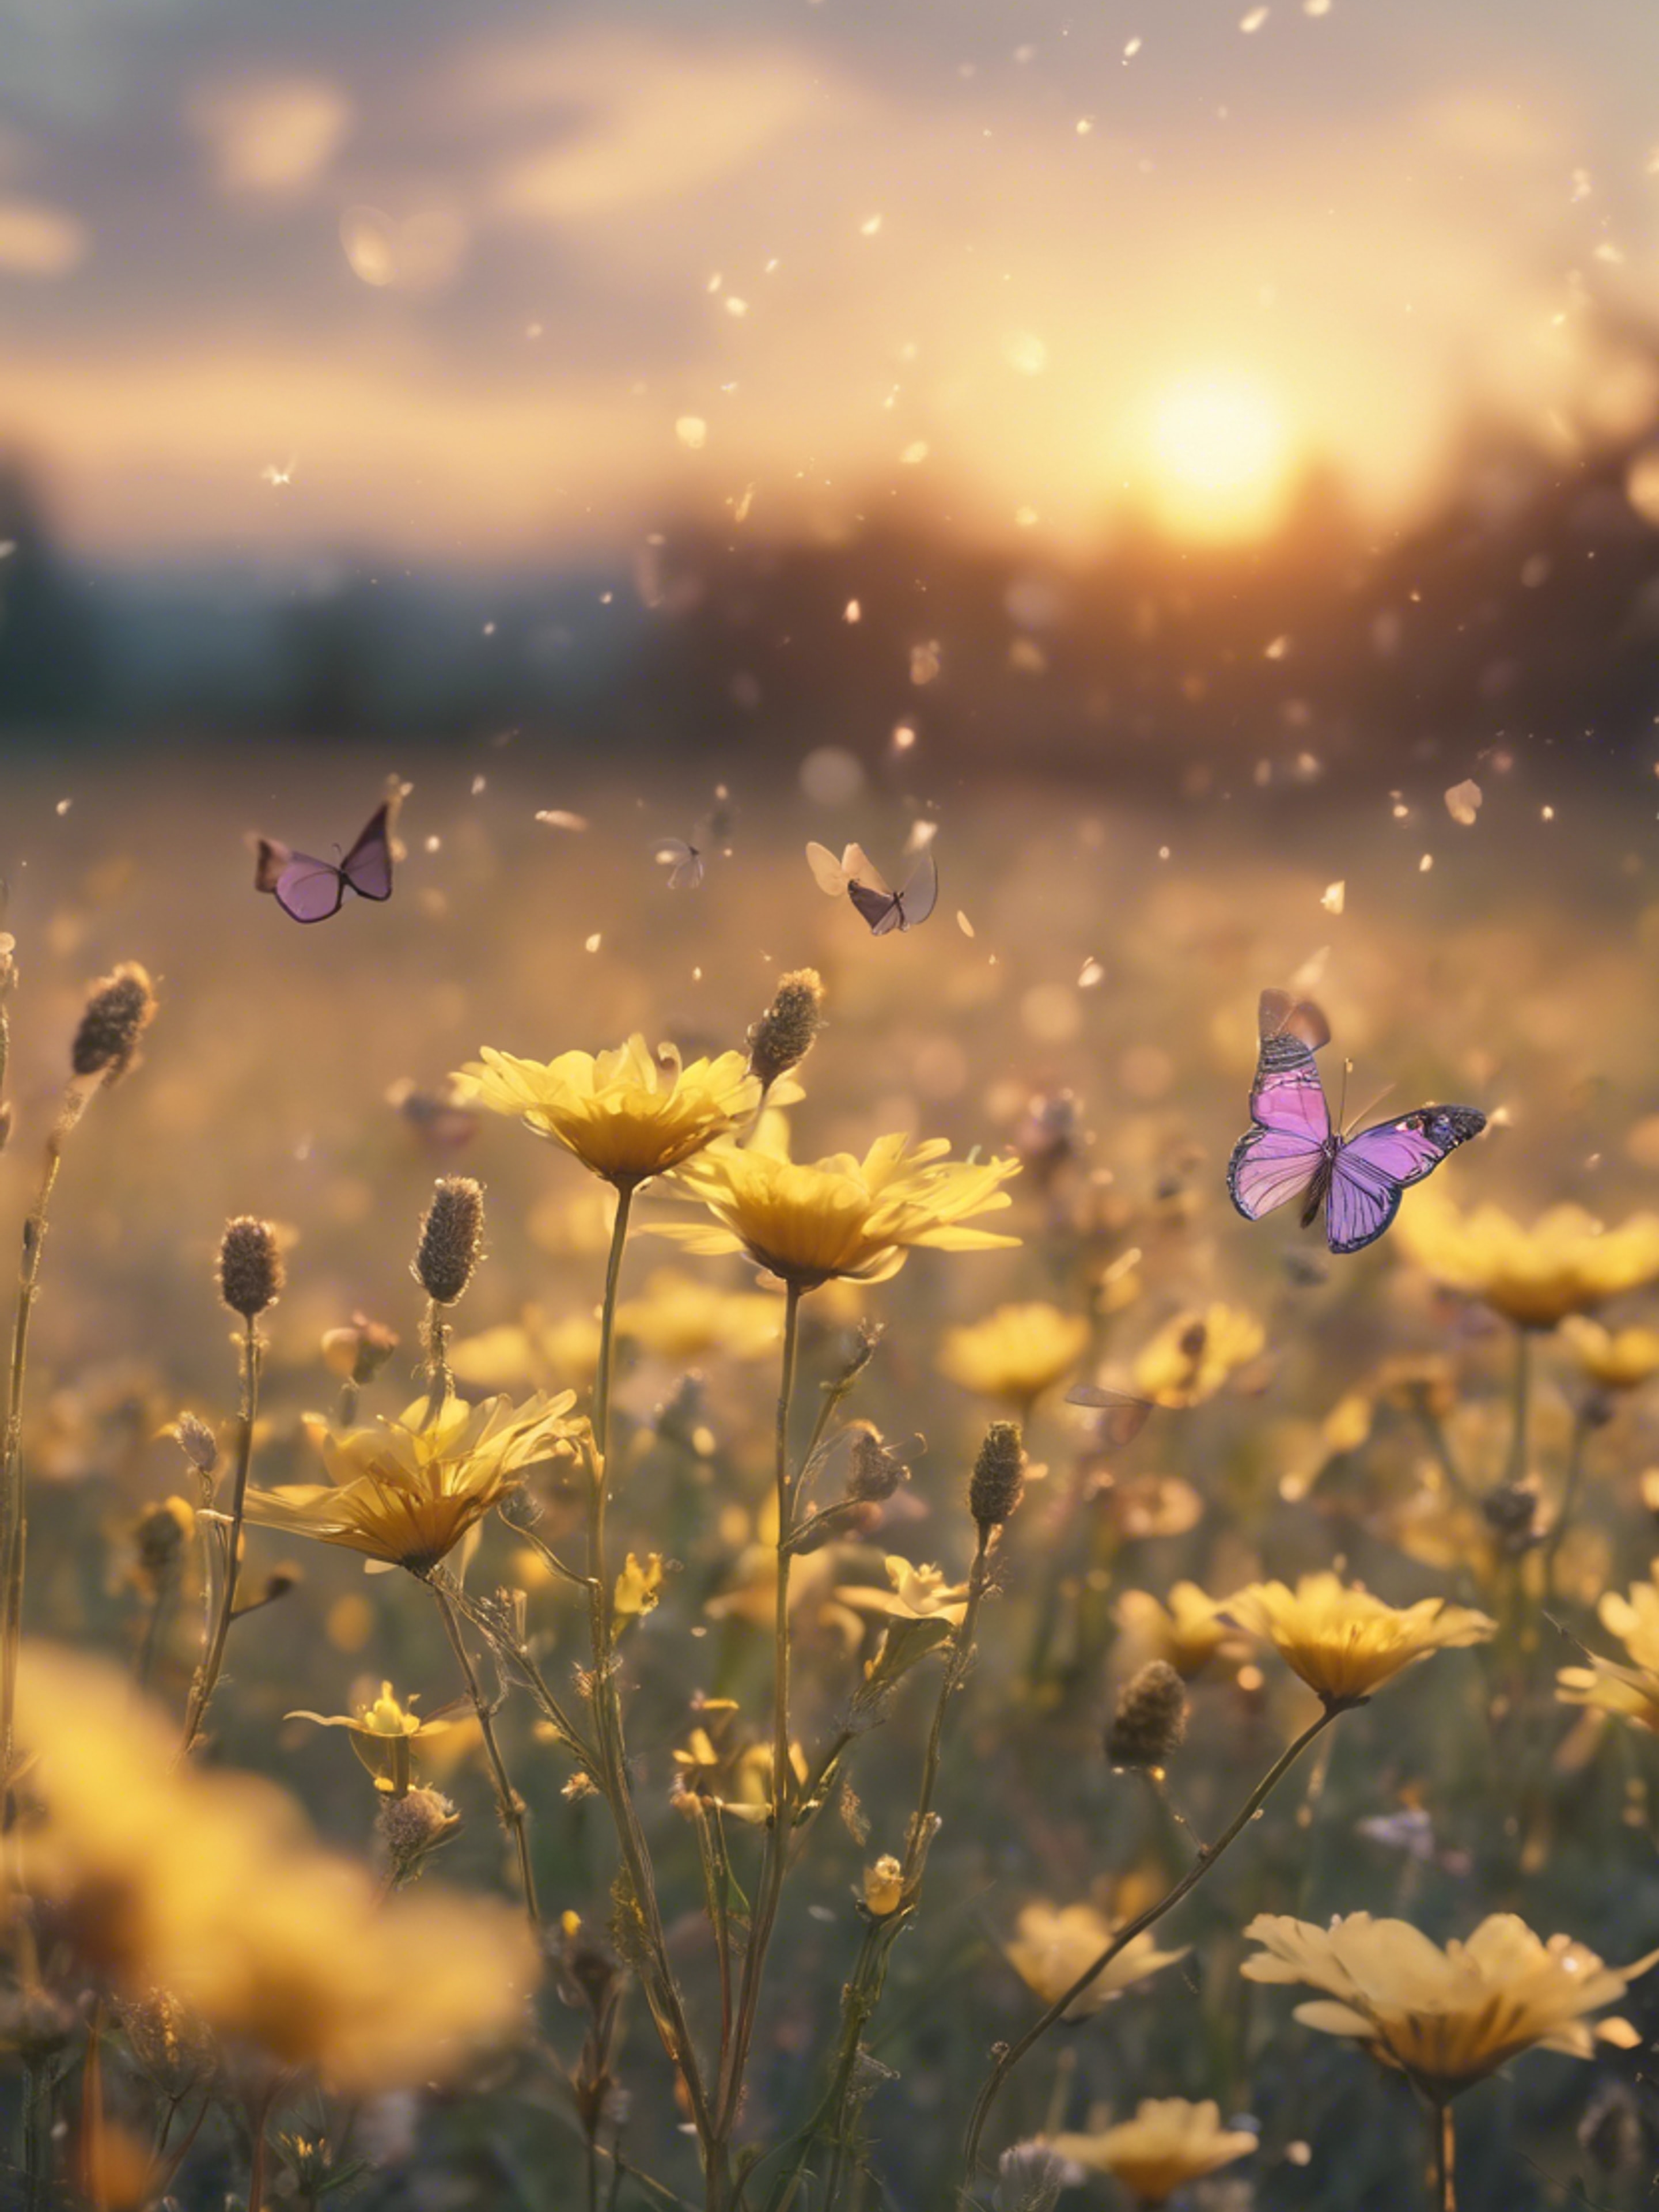 Sunset scene overlooking a meadow filled with pastel yellow flowers and kawaii butterflies fluttering above them. Tapeet[4de922e1f50d428d8d1a]